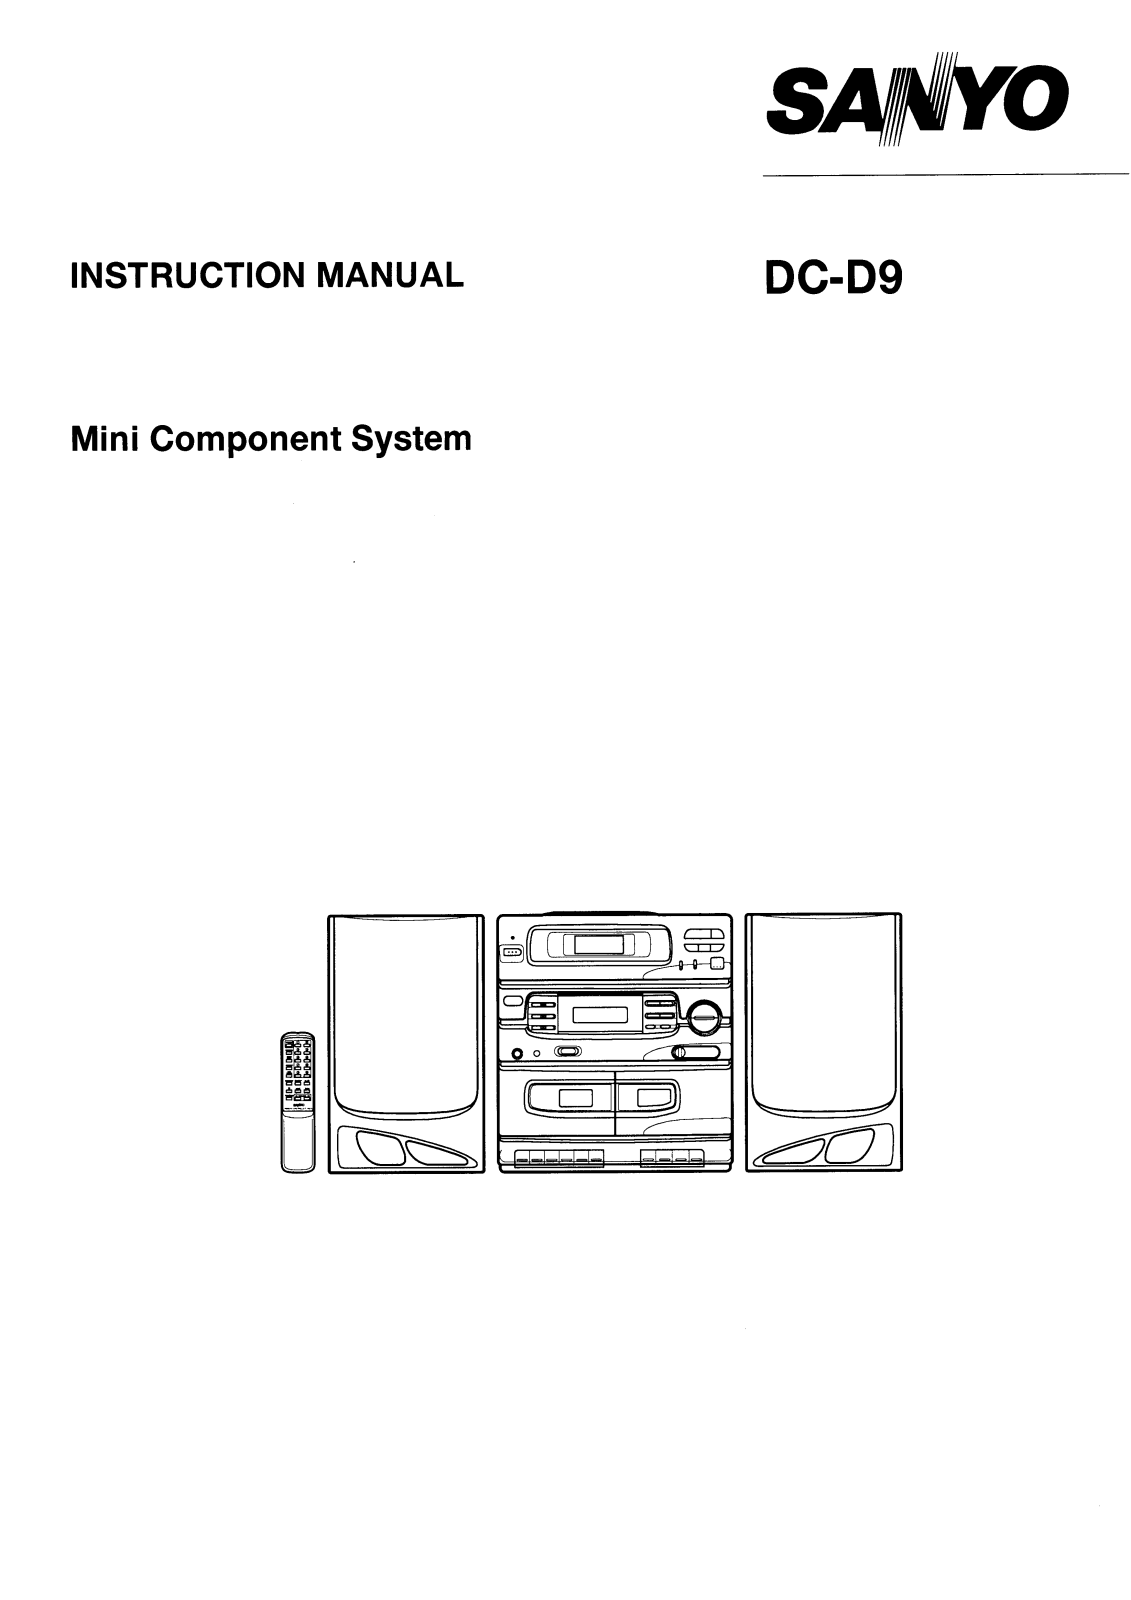 Sanyo DC-D9 Instruction Manual